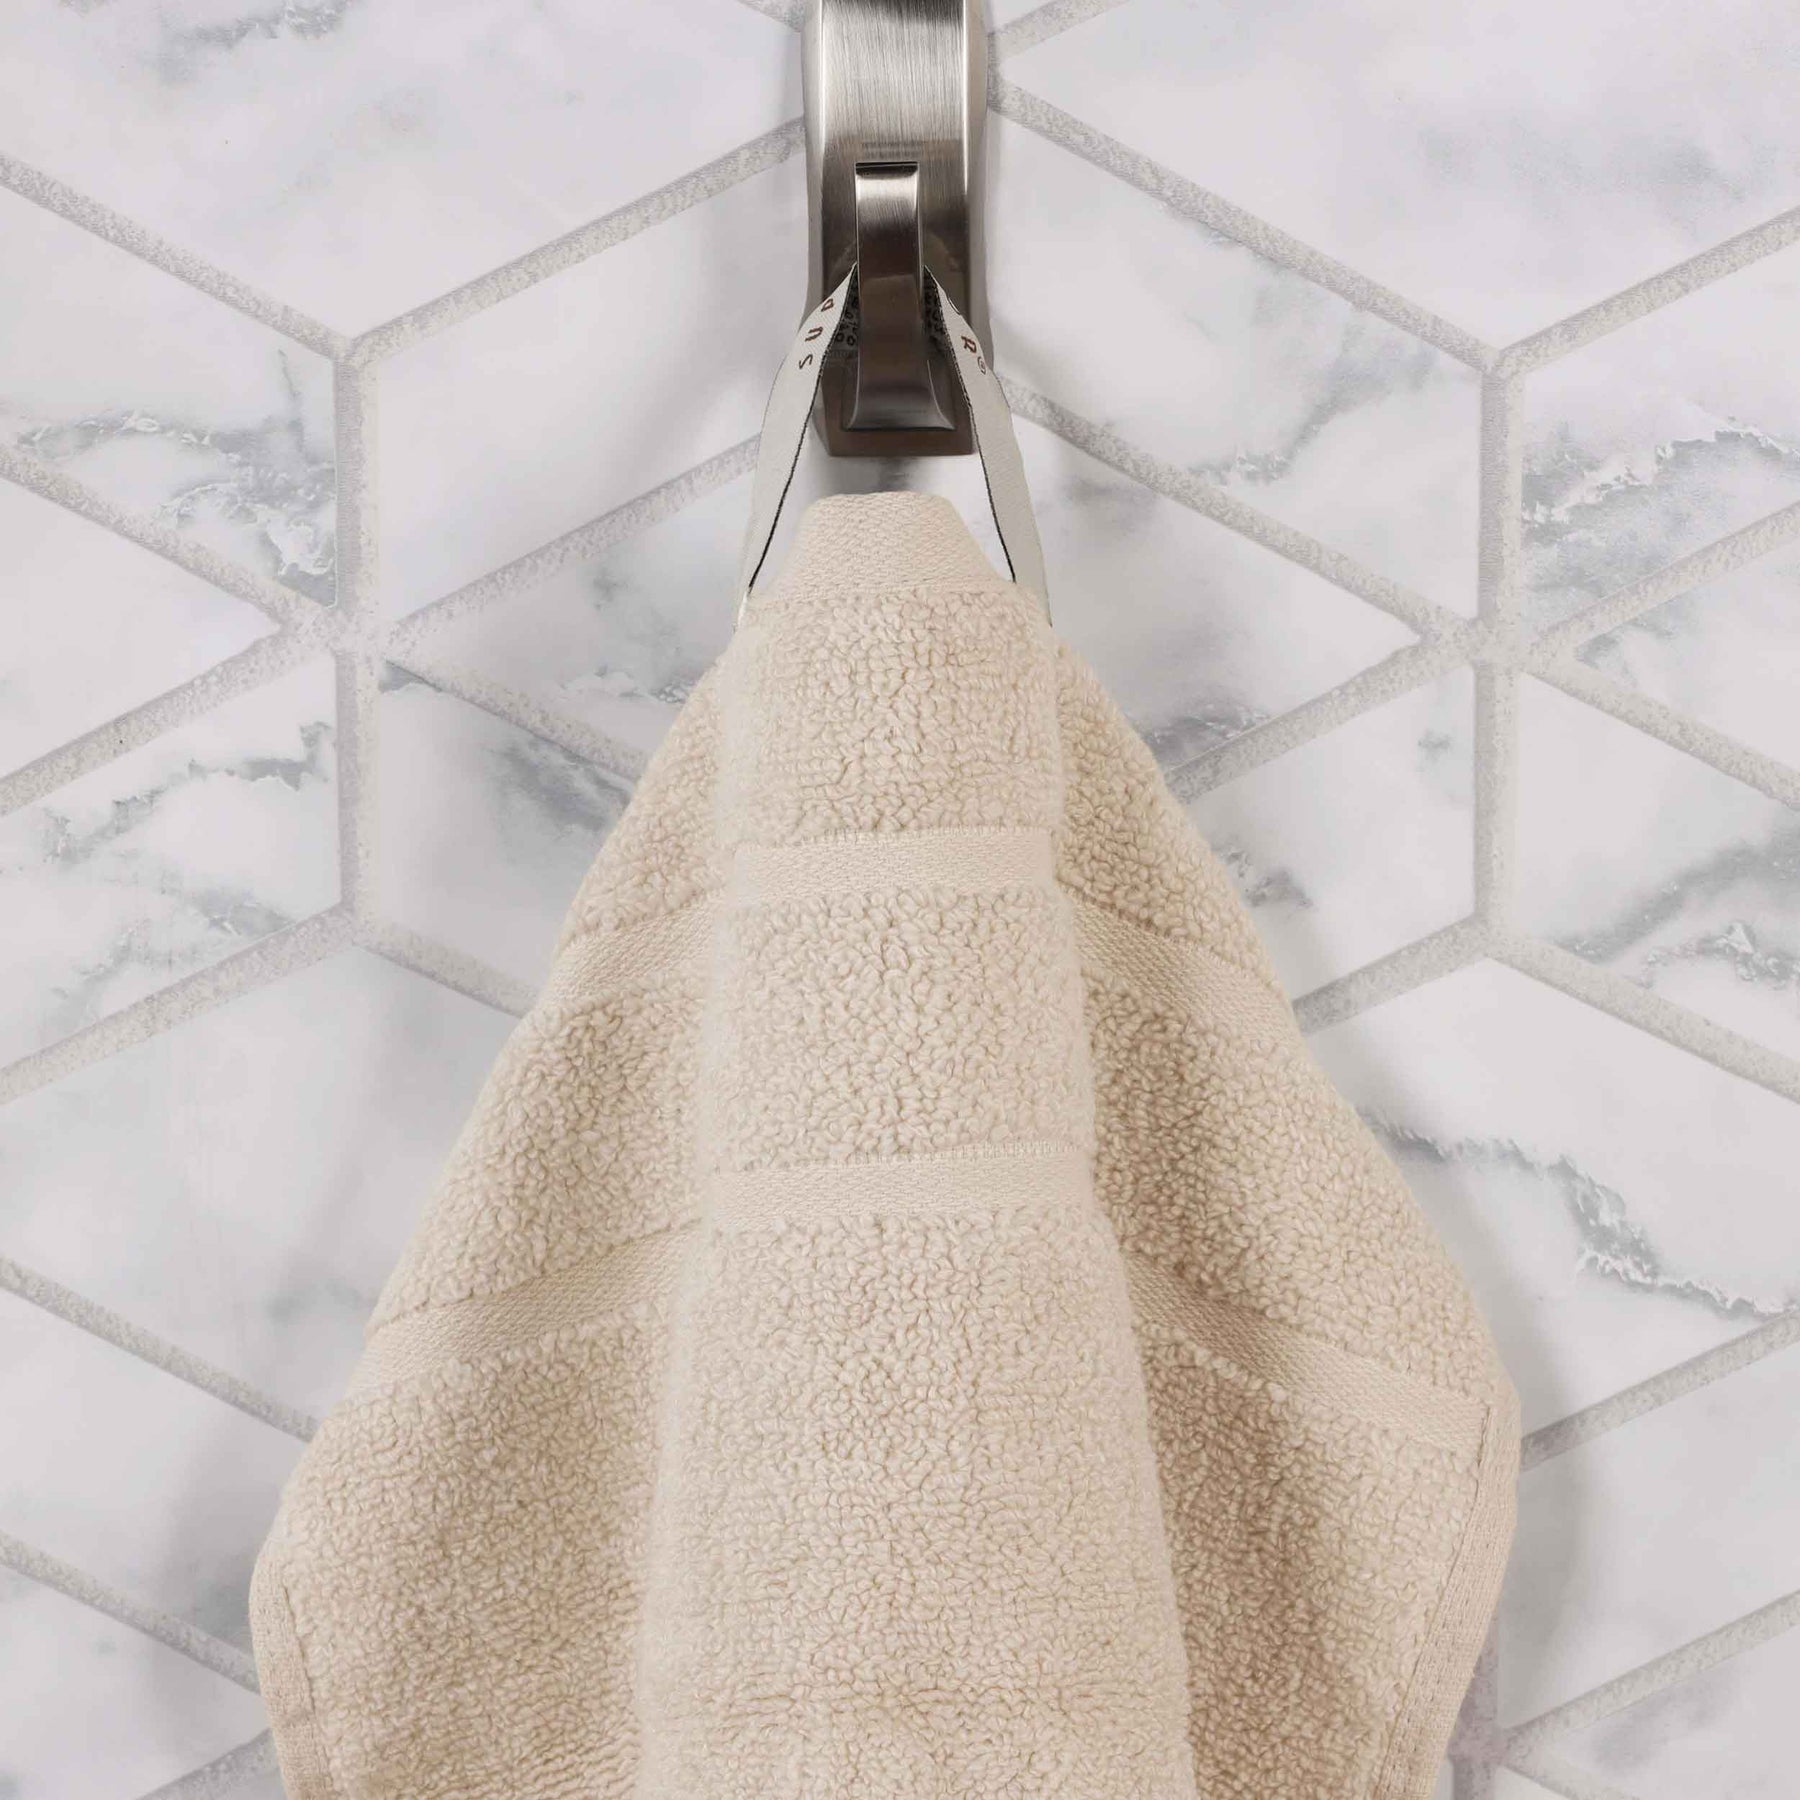 Zero Twist Cotton Waffle Honeycomb Plush Absorbent 9 Piece Towel Set - Ivory